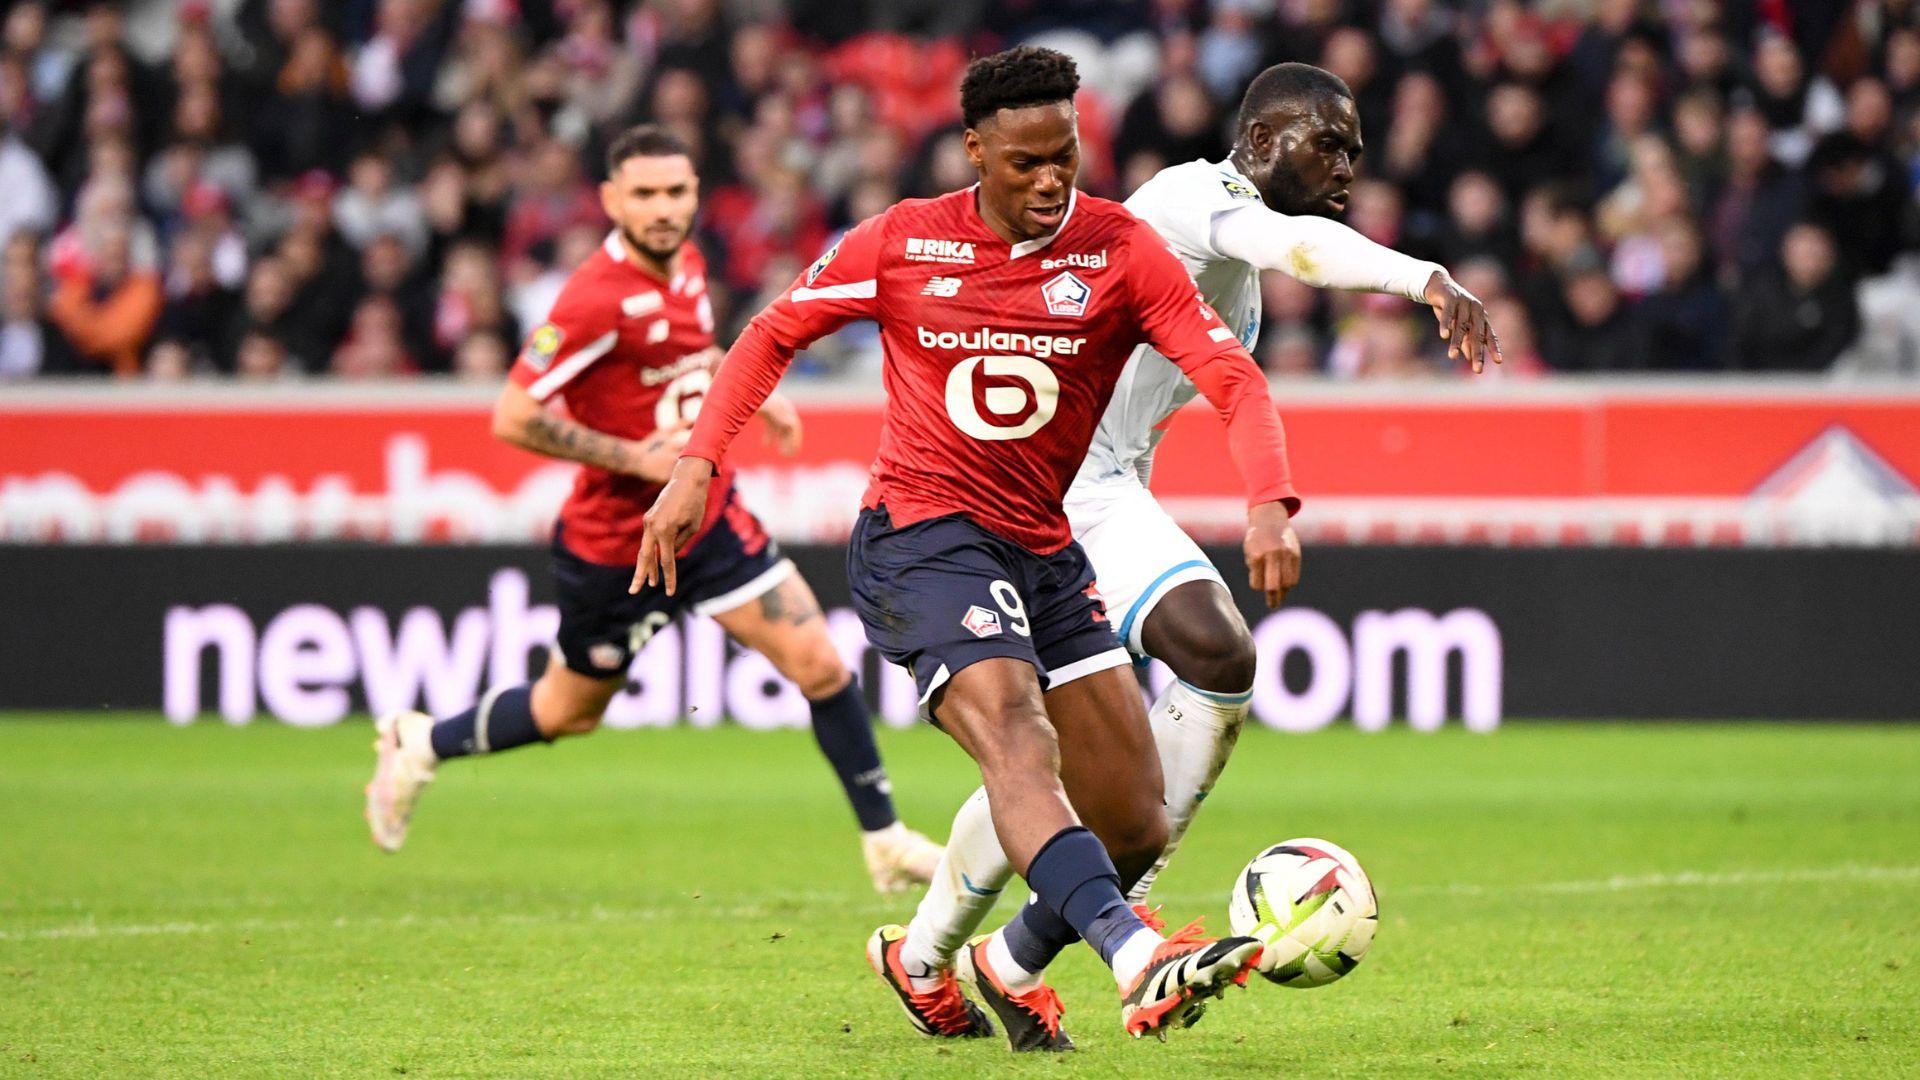 VIDEO | Ligue 1 Highlights: Lille vs Le Havre